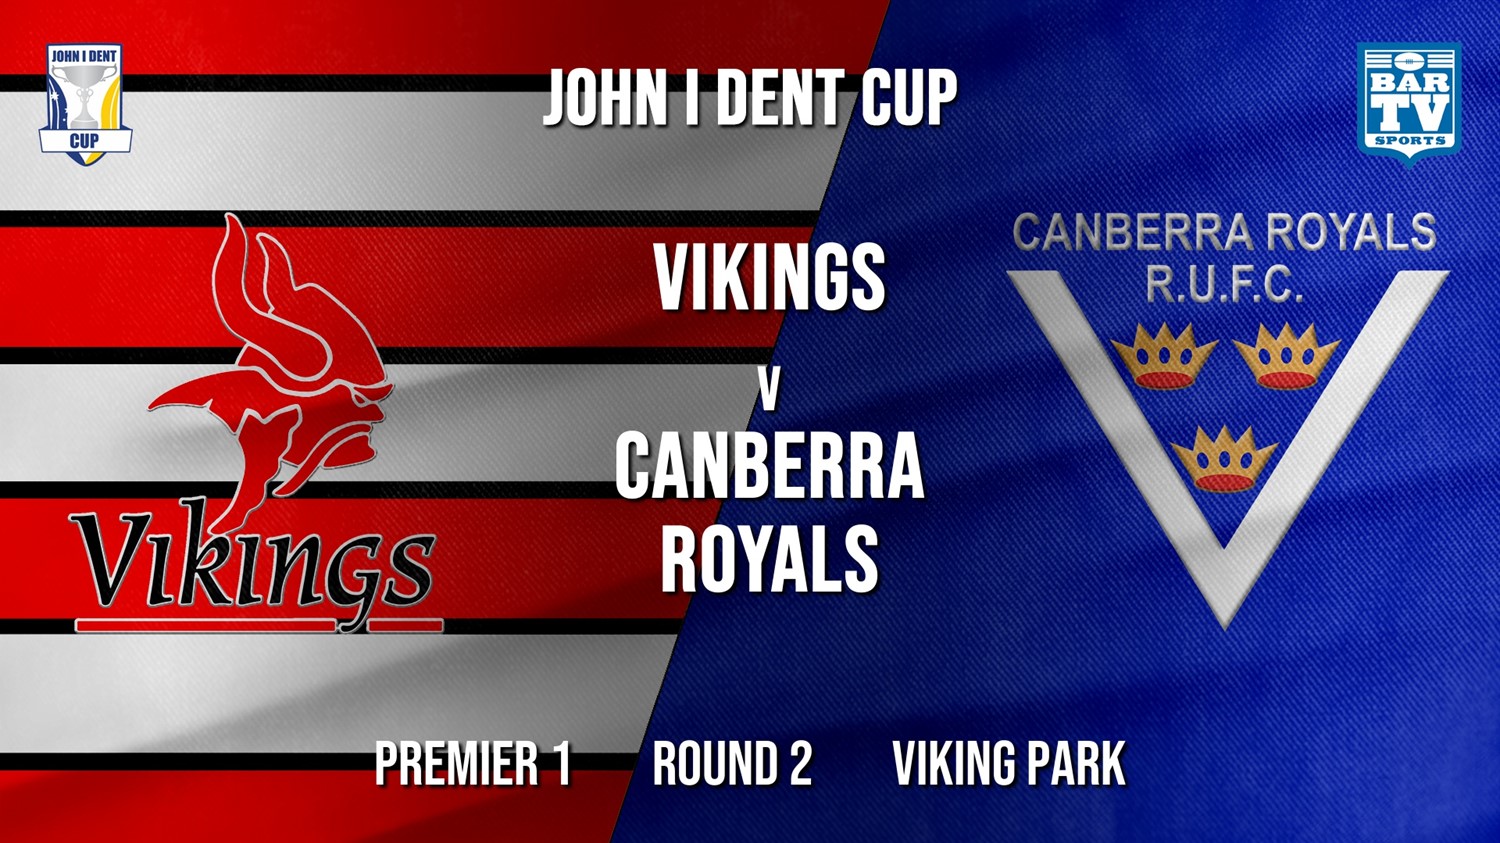 John I Dent Round 2 - Premier 1 - Tuggeranong Vikings v Canberra Royals Minigame Slate Image